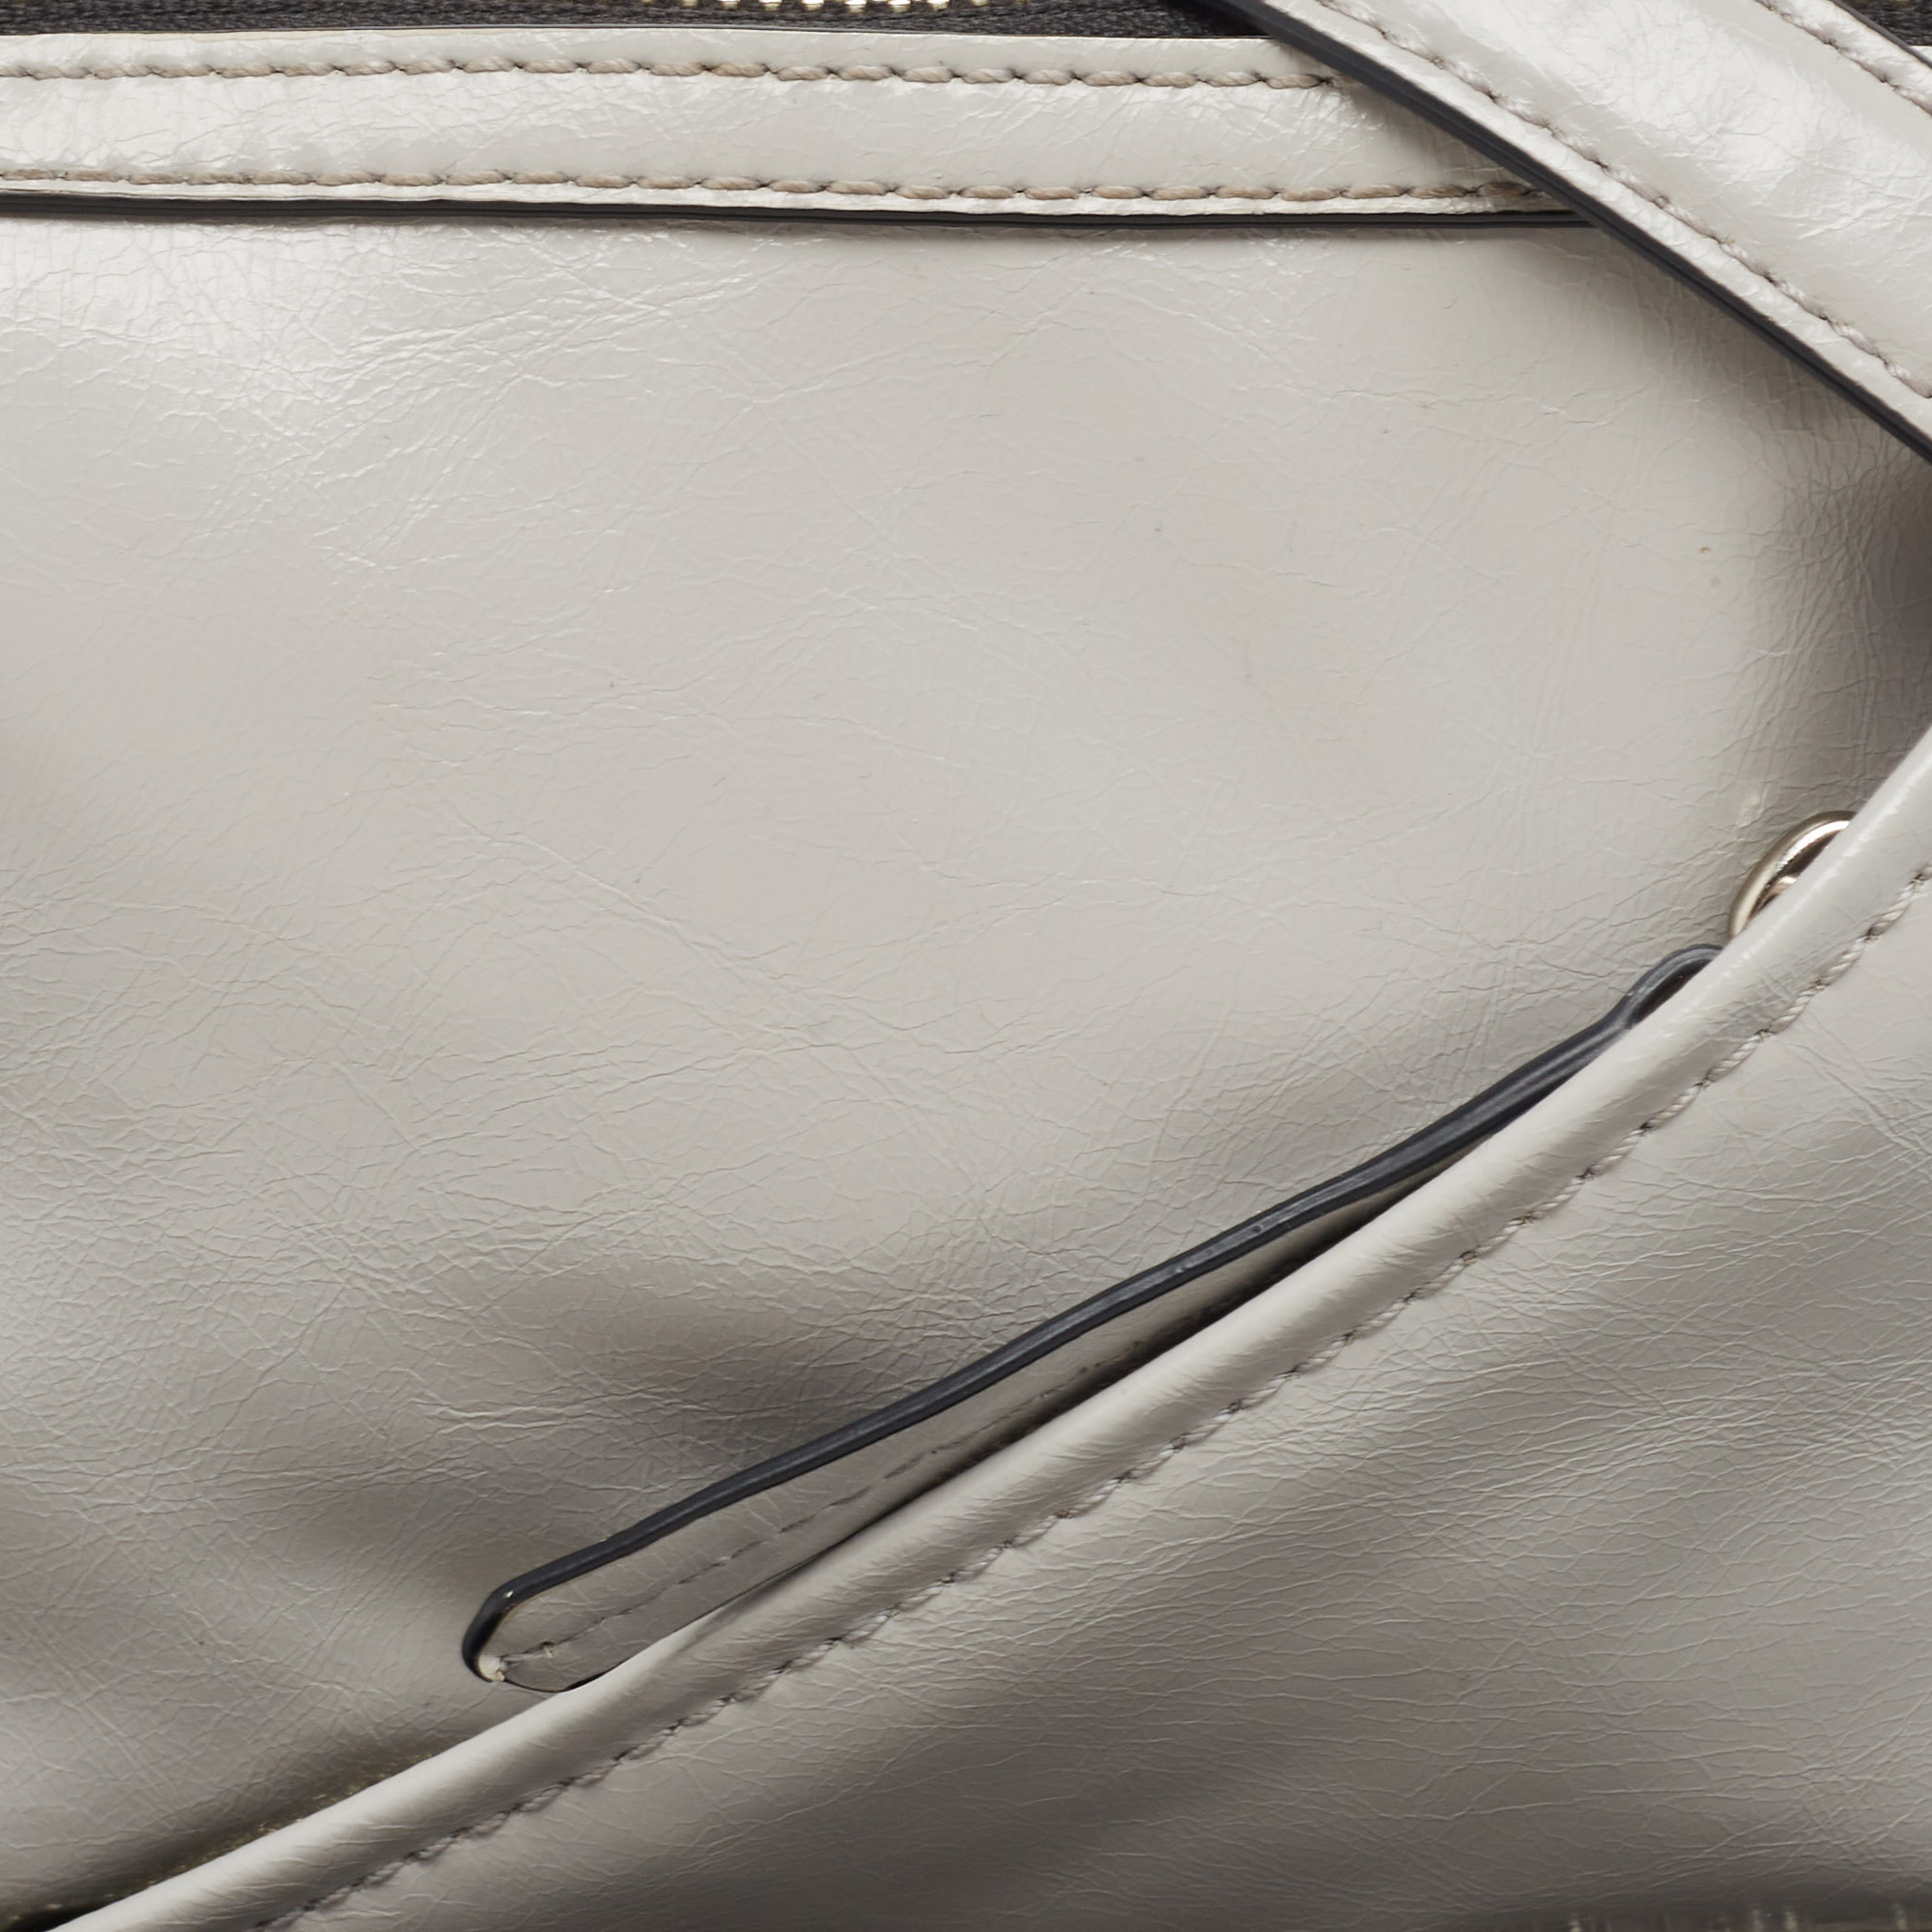 Karl Lagerfeld Grey Leather Front Zip Crossbody Bag